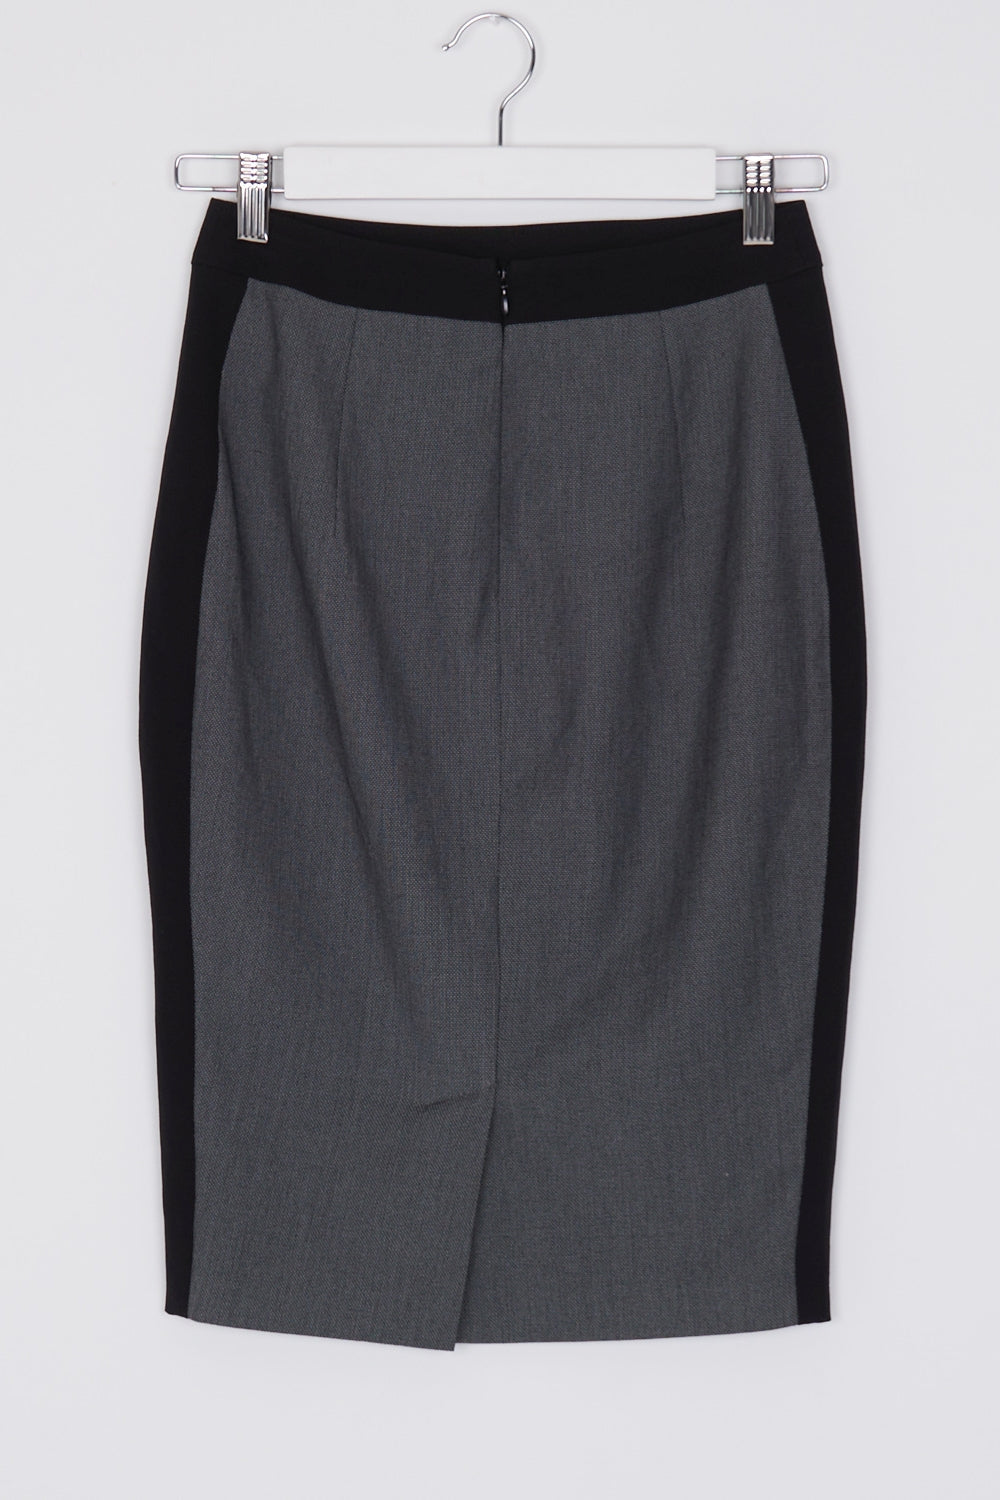 Portmans Grey And Black Pencil Skirt 6